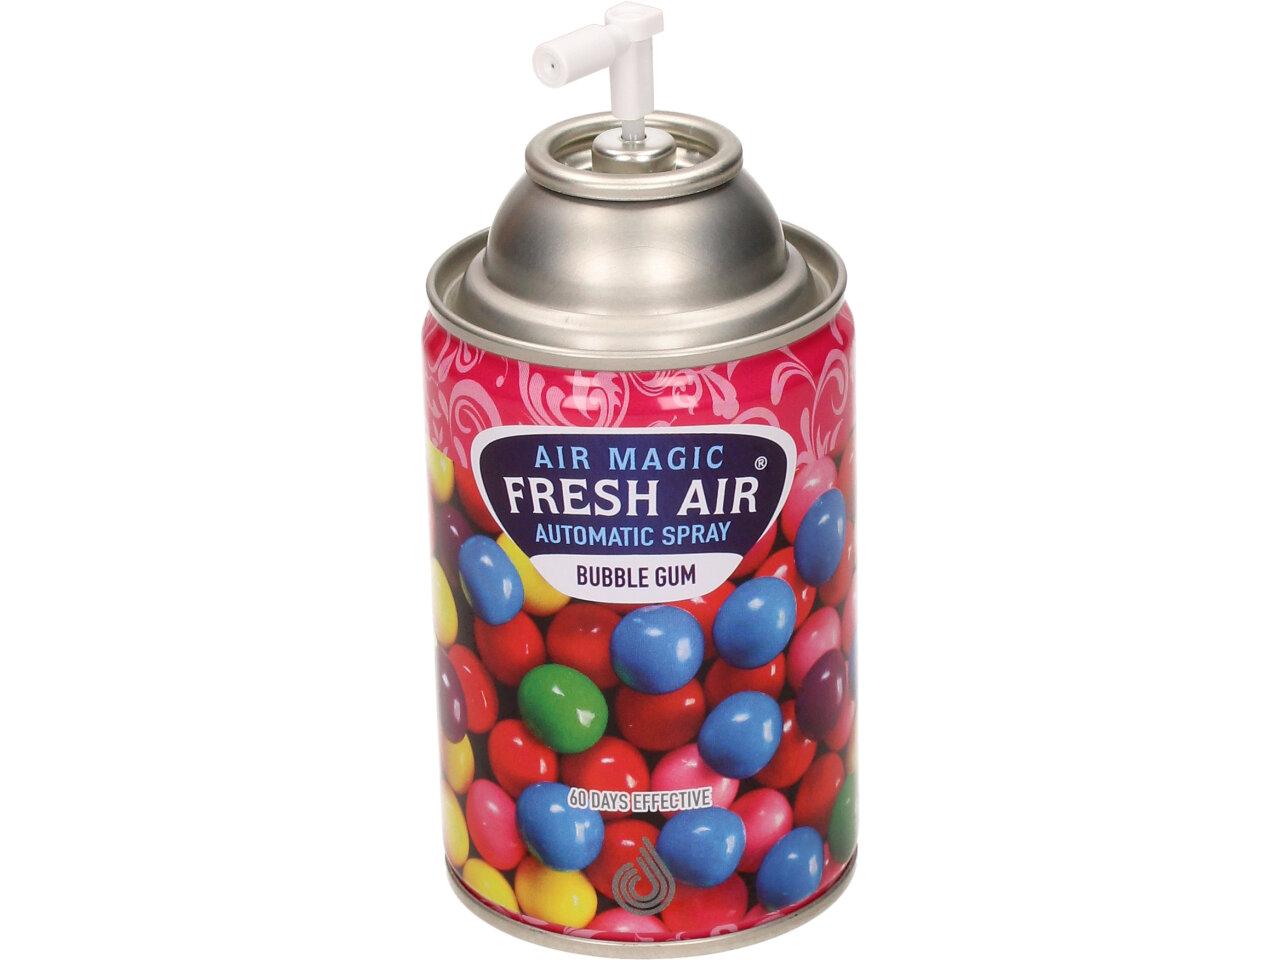 FRESH AIR Bubble gum - náplň do automatického osvěžovače vzduchu 260ml